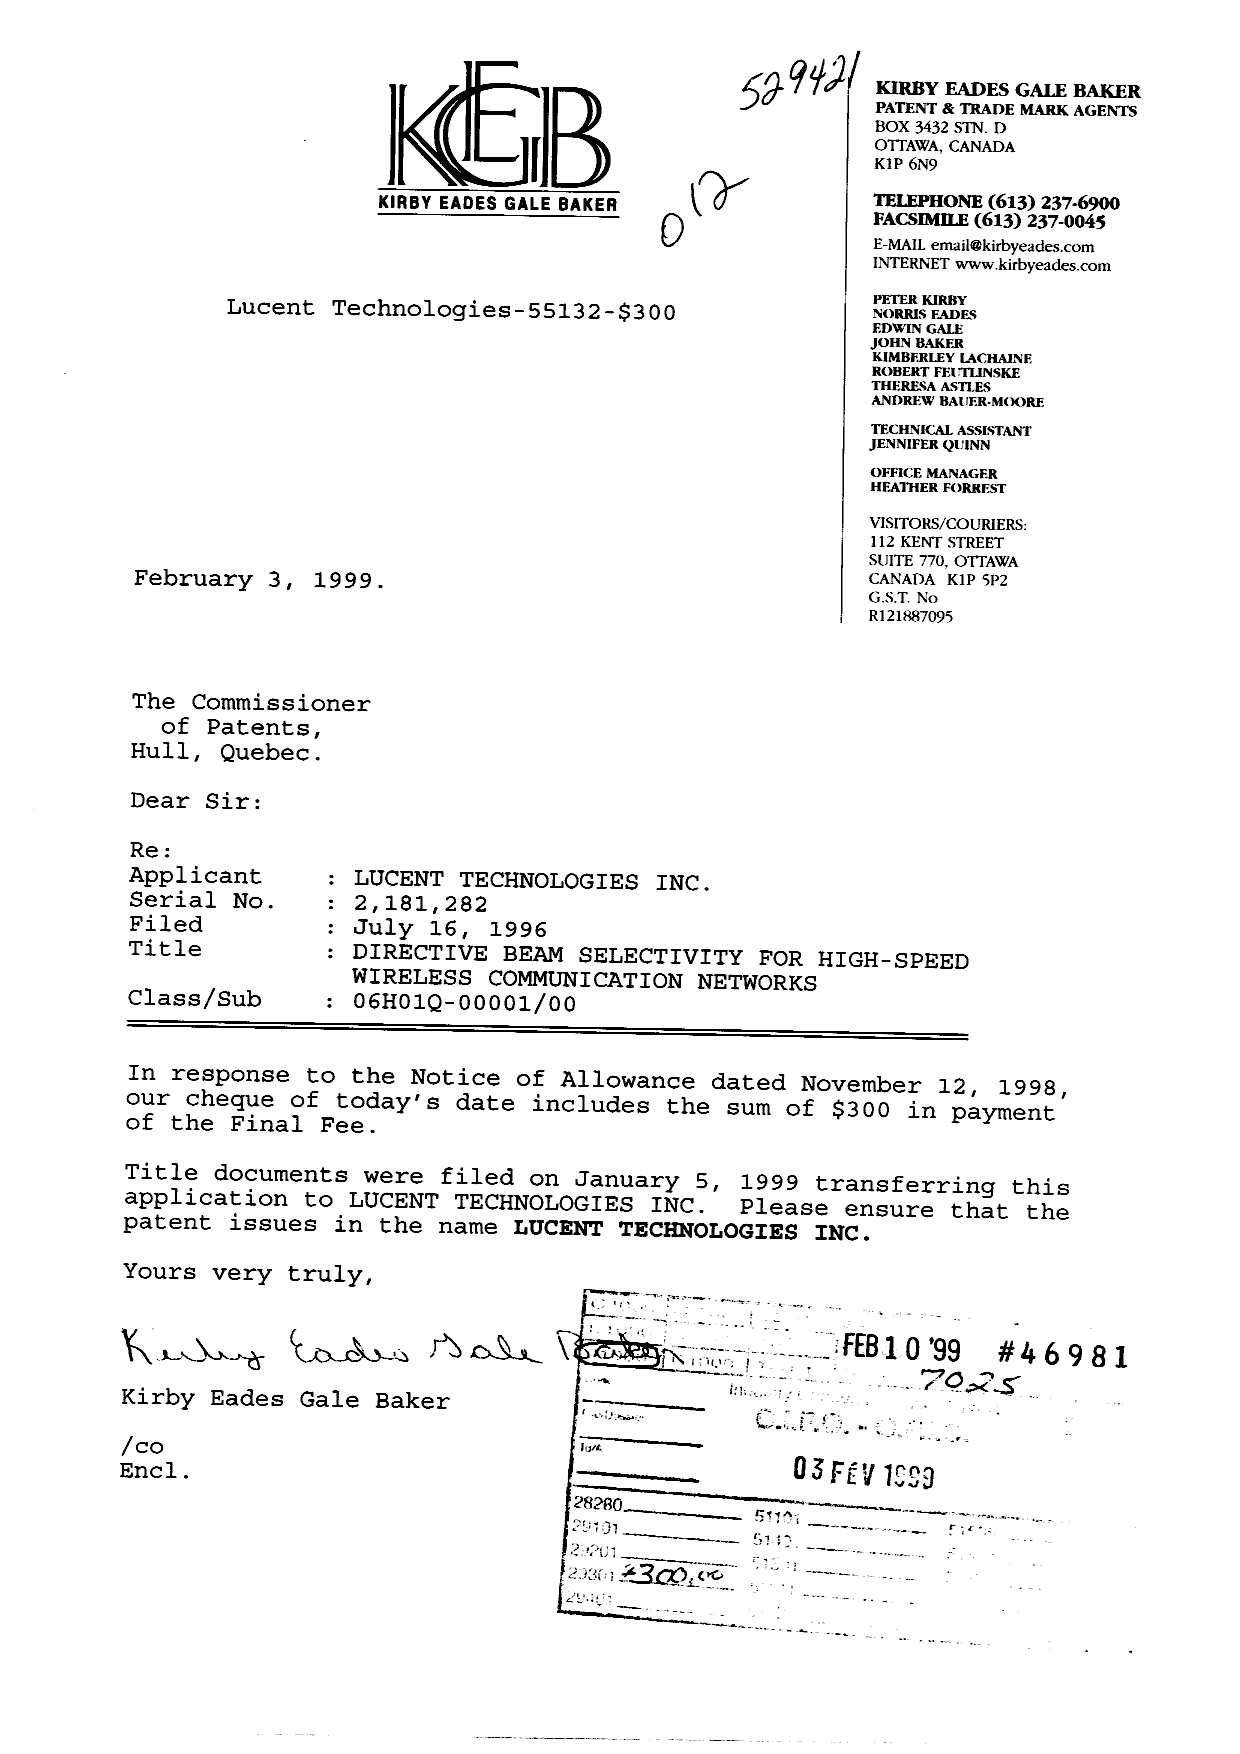 Canadian Patent Document 2181282. Correspondence 19981203. Image 1 of 1